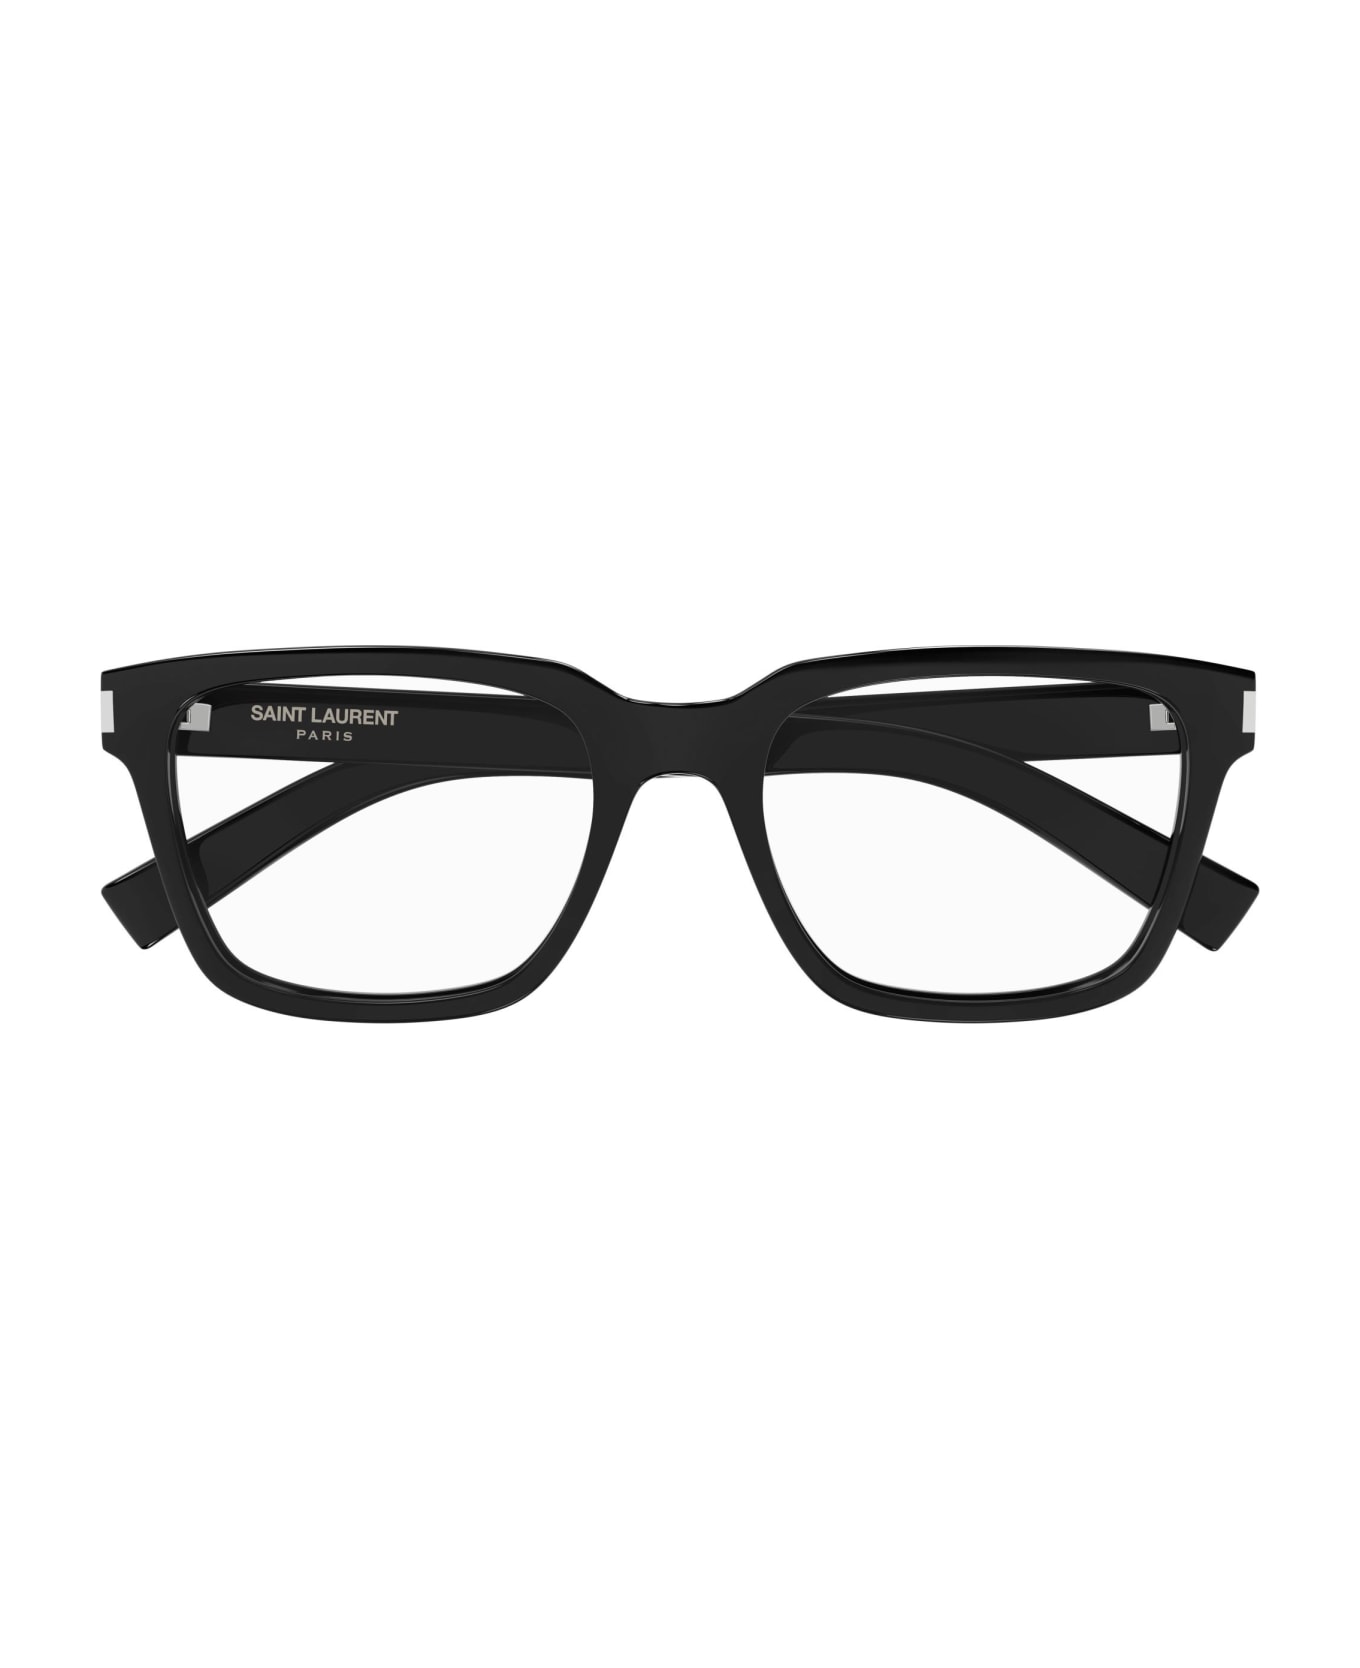 Saint Laurent Eyewear Glasses - Nero アイウェア